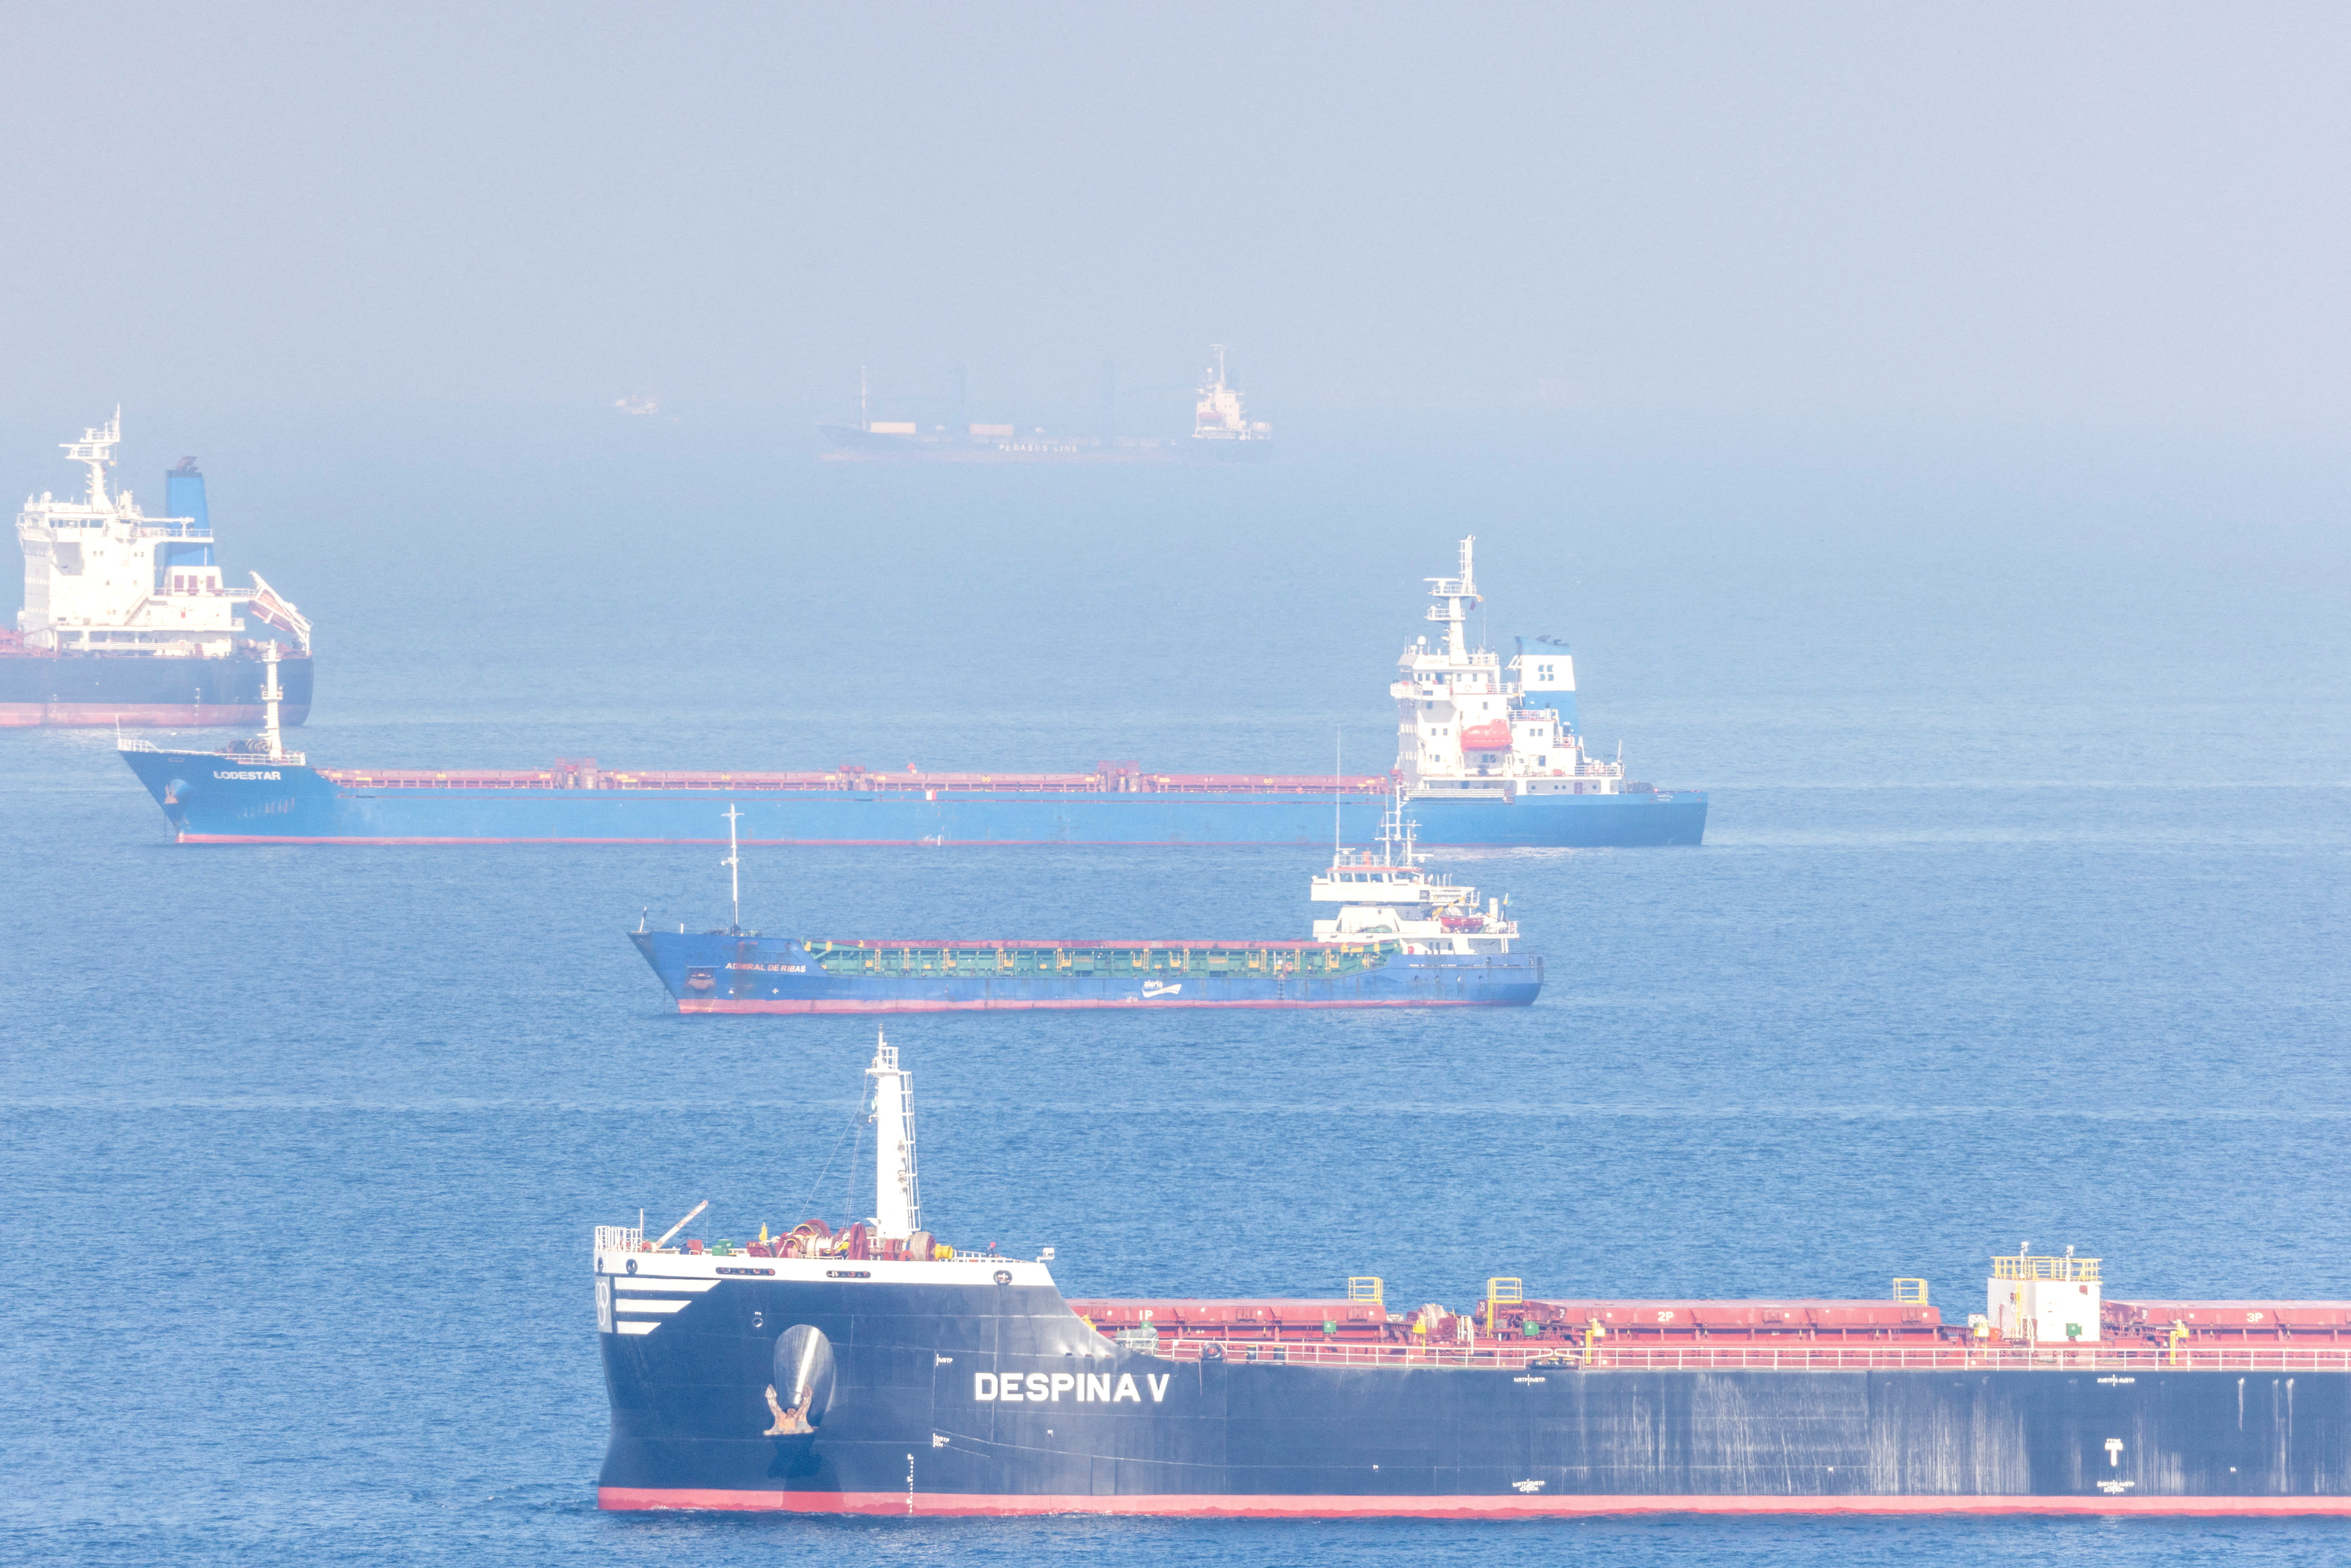 FILE PHOTO: Cargo ship Despina V, carrying Ukrainian grain, is seen in the Black Sea off Kilyos near Istanbul